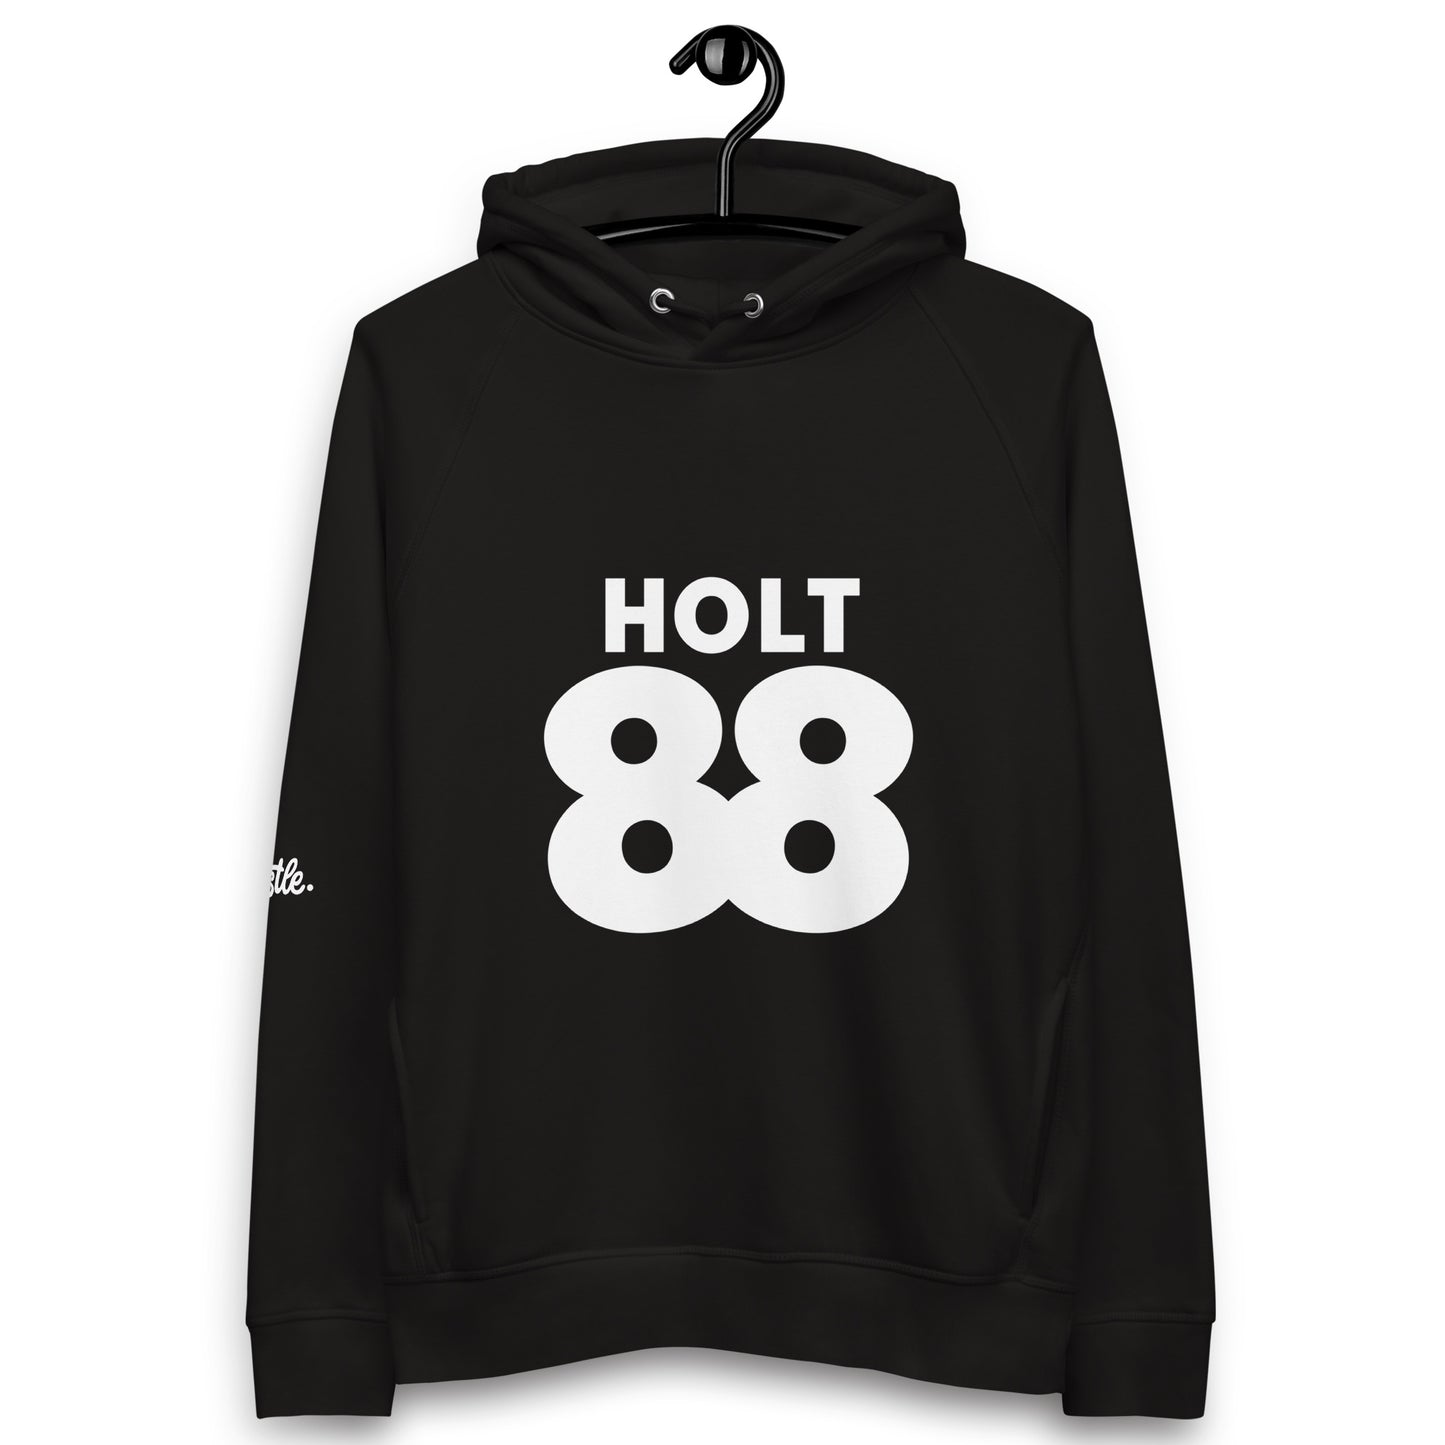 Holt 88 X Hustle Pullover Hoodie